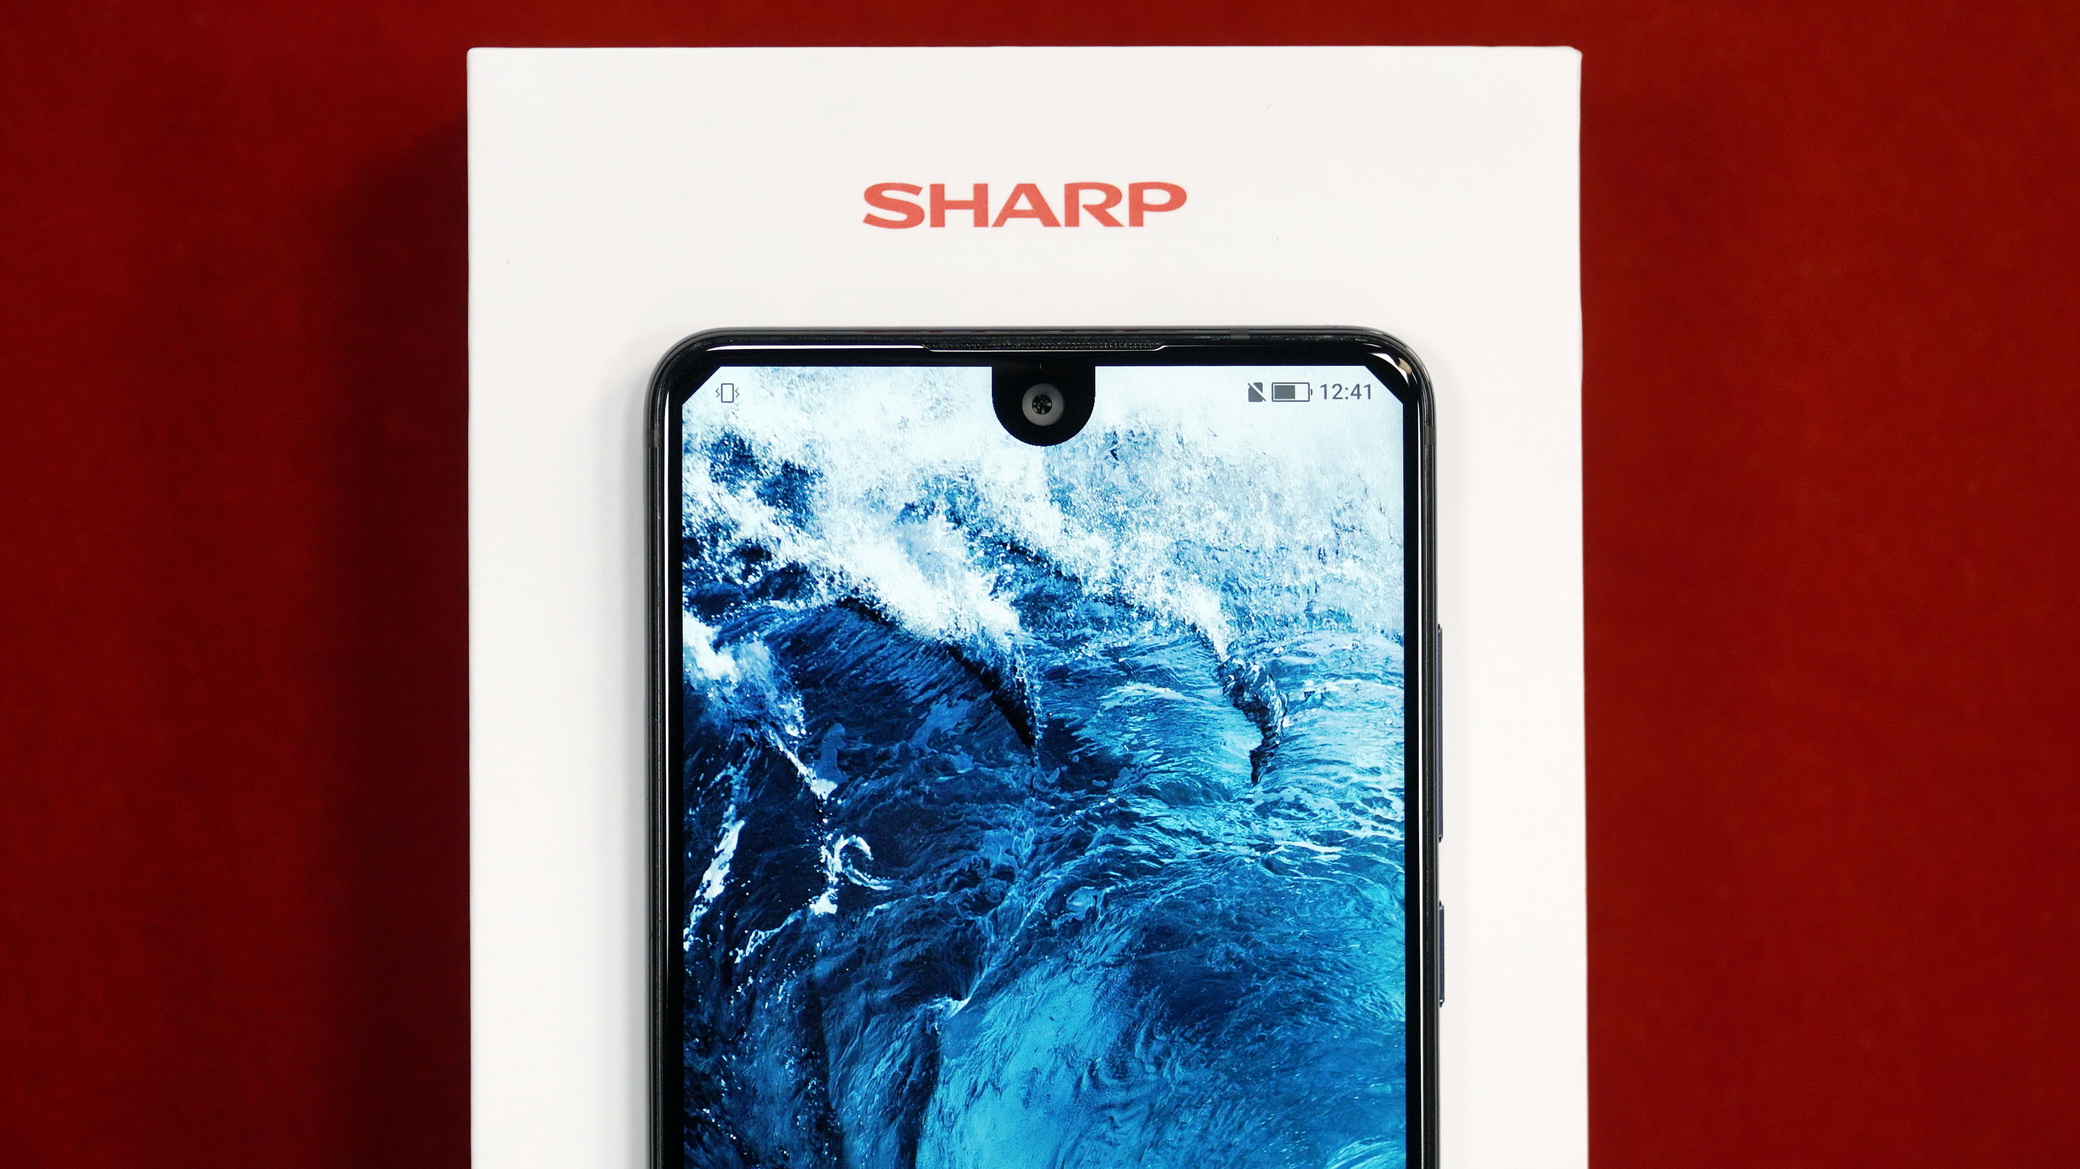  Sharp Aquos S2  $159  NFC    